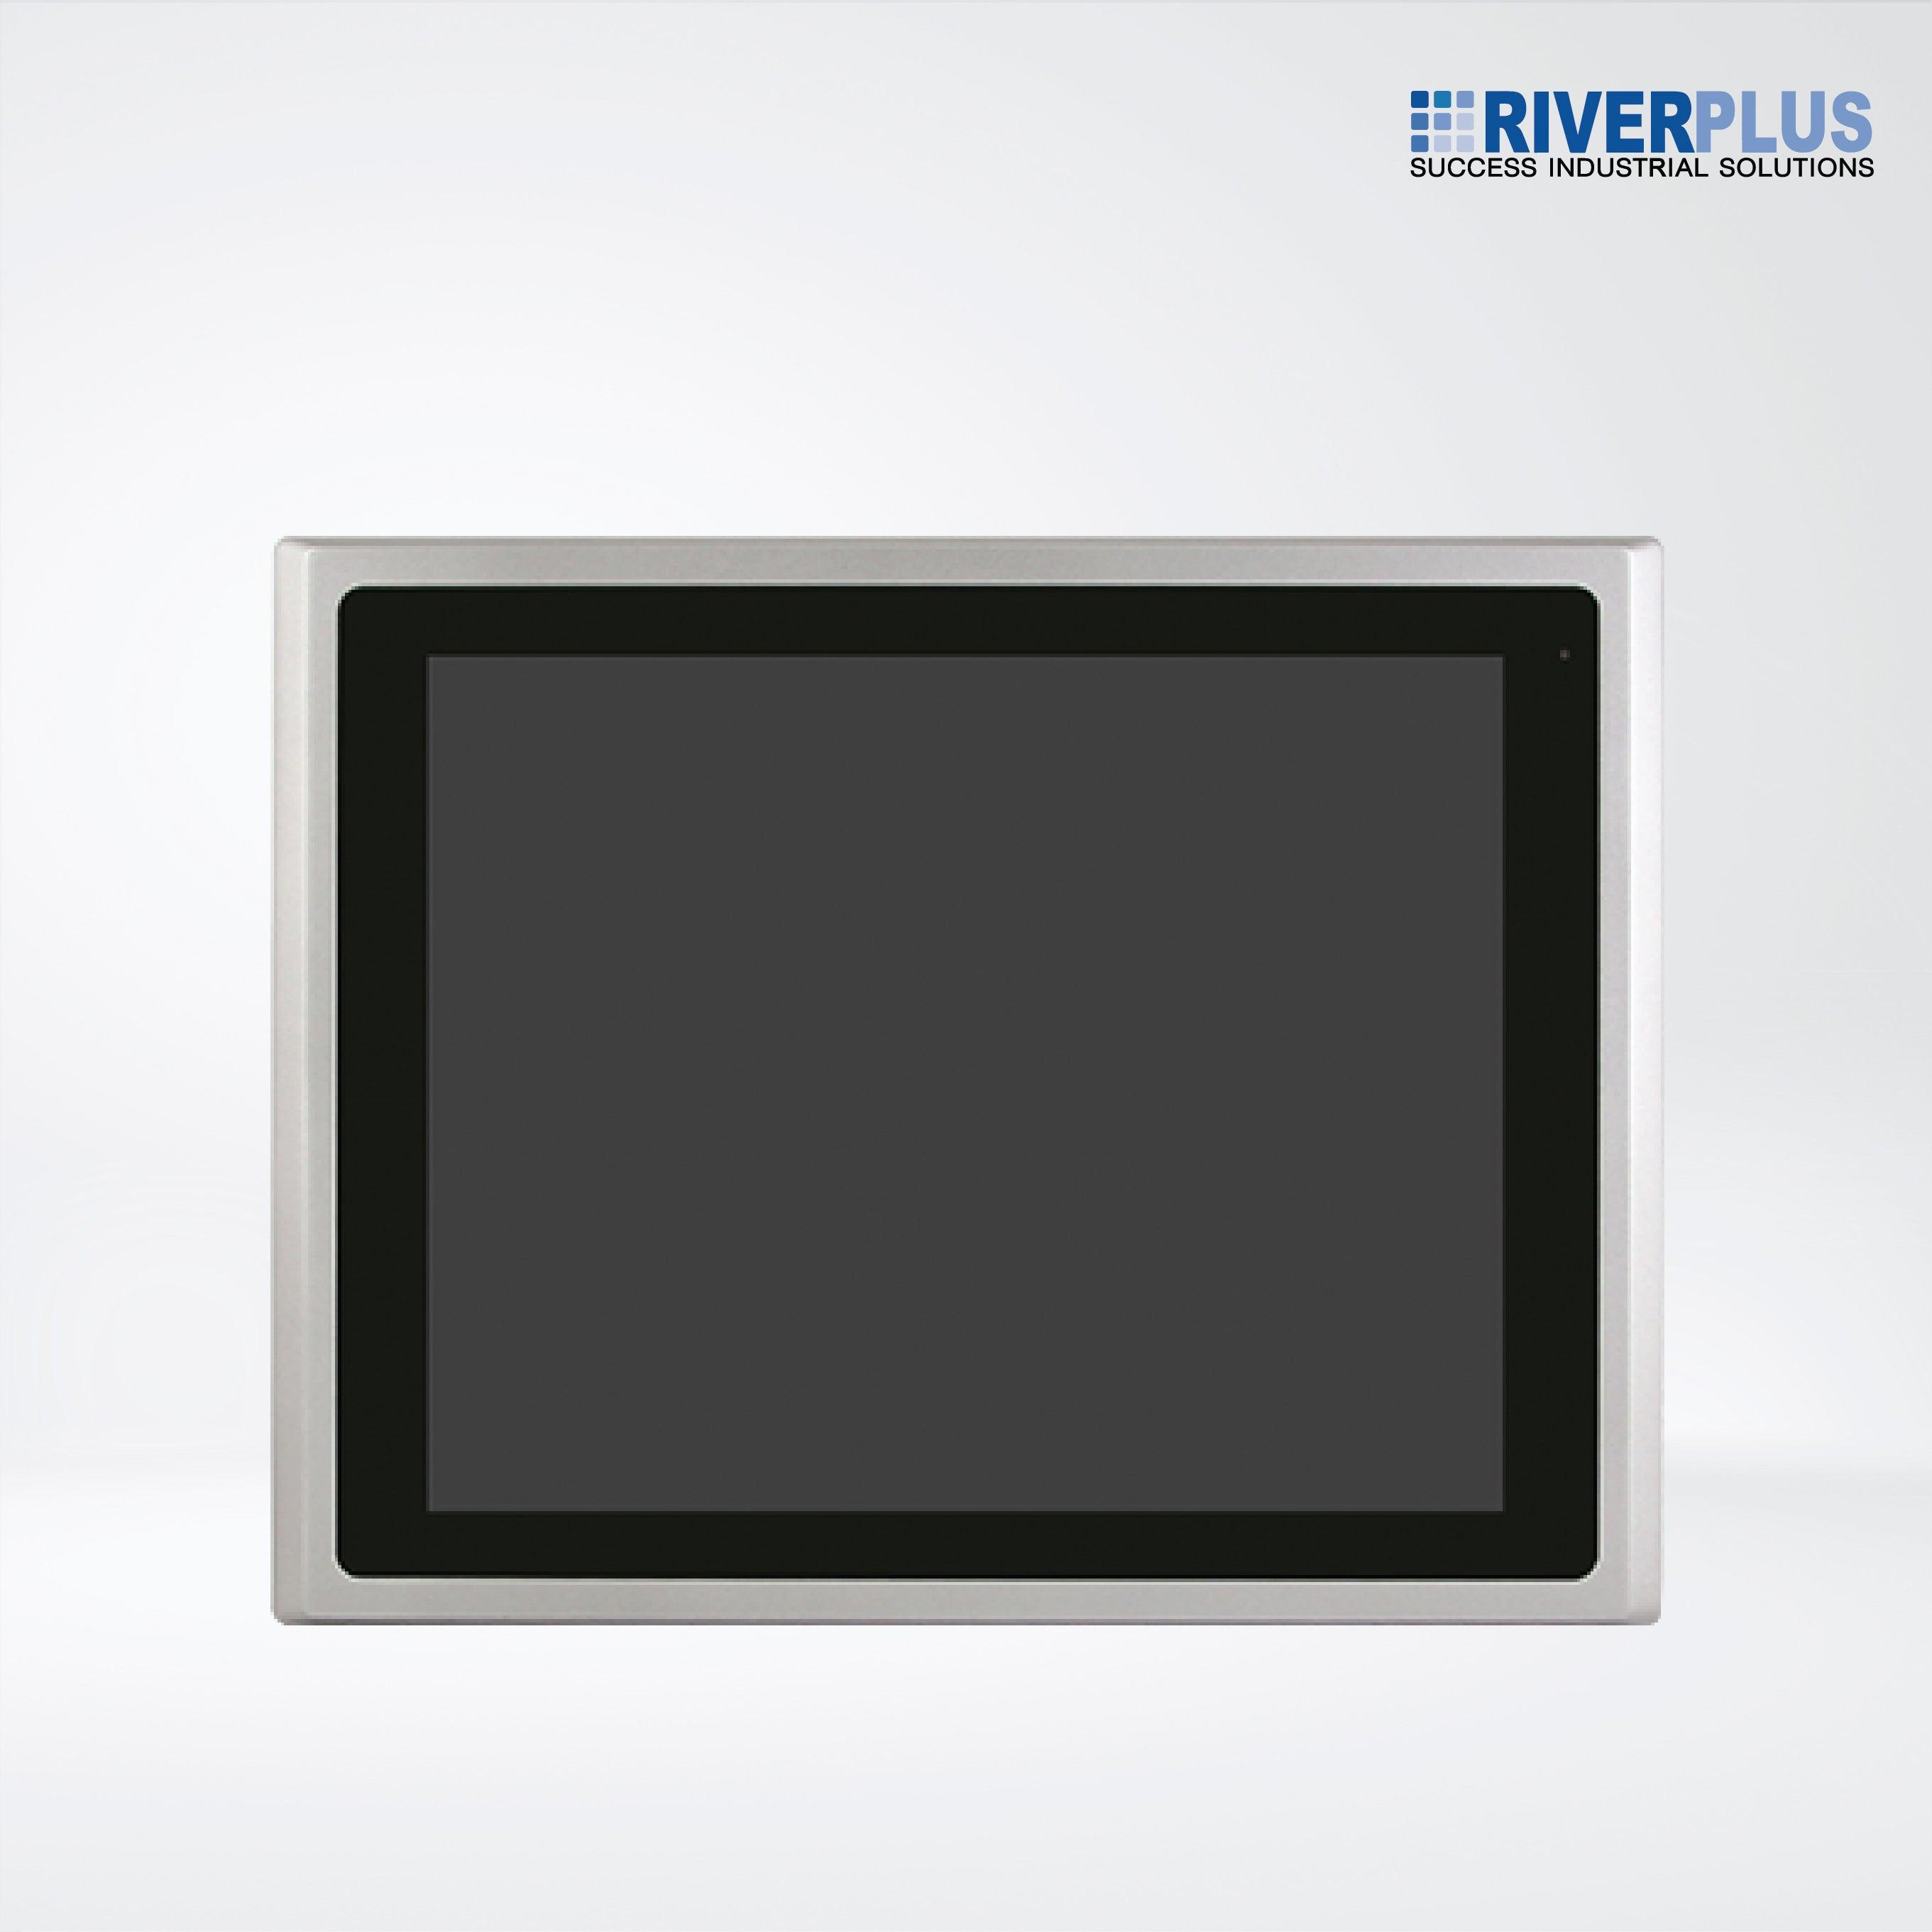 ARCHMI-917BR 8th Gen. Intel Core i3/i5, Fanless Industrial Compact Size Panel PC - Riverplus